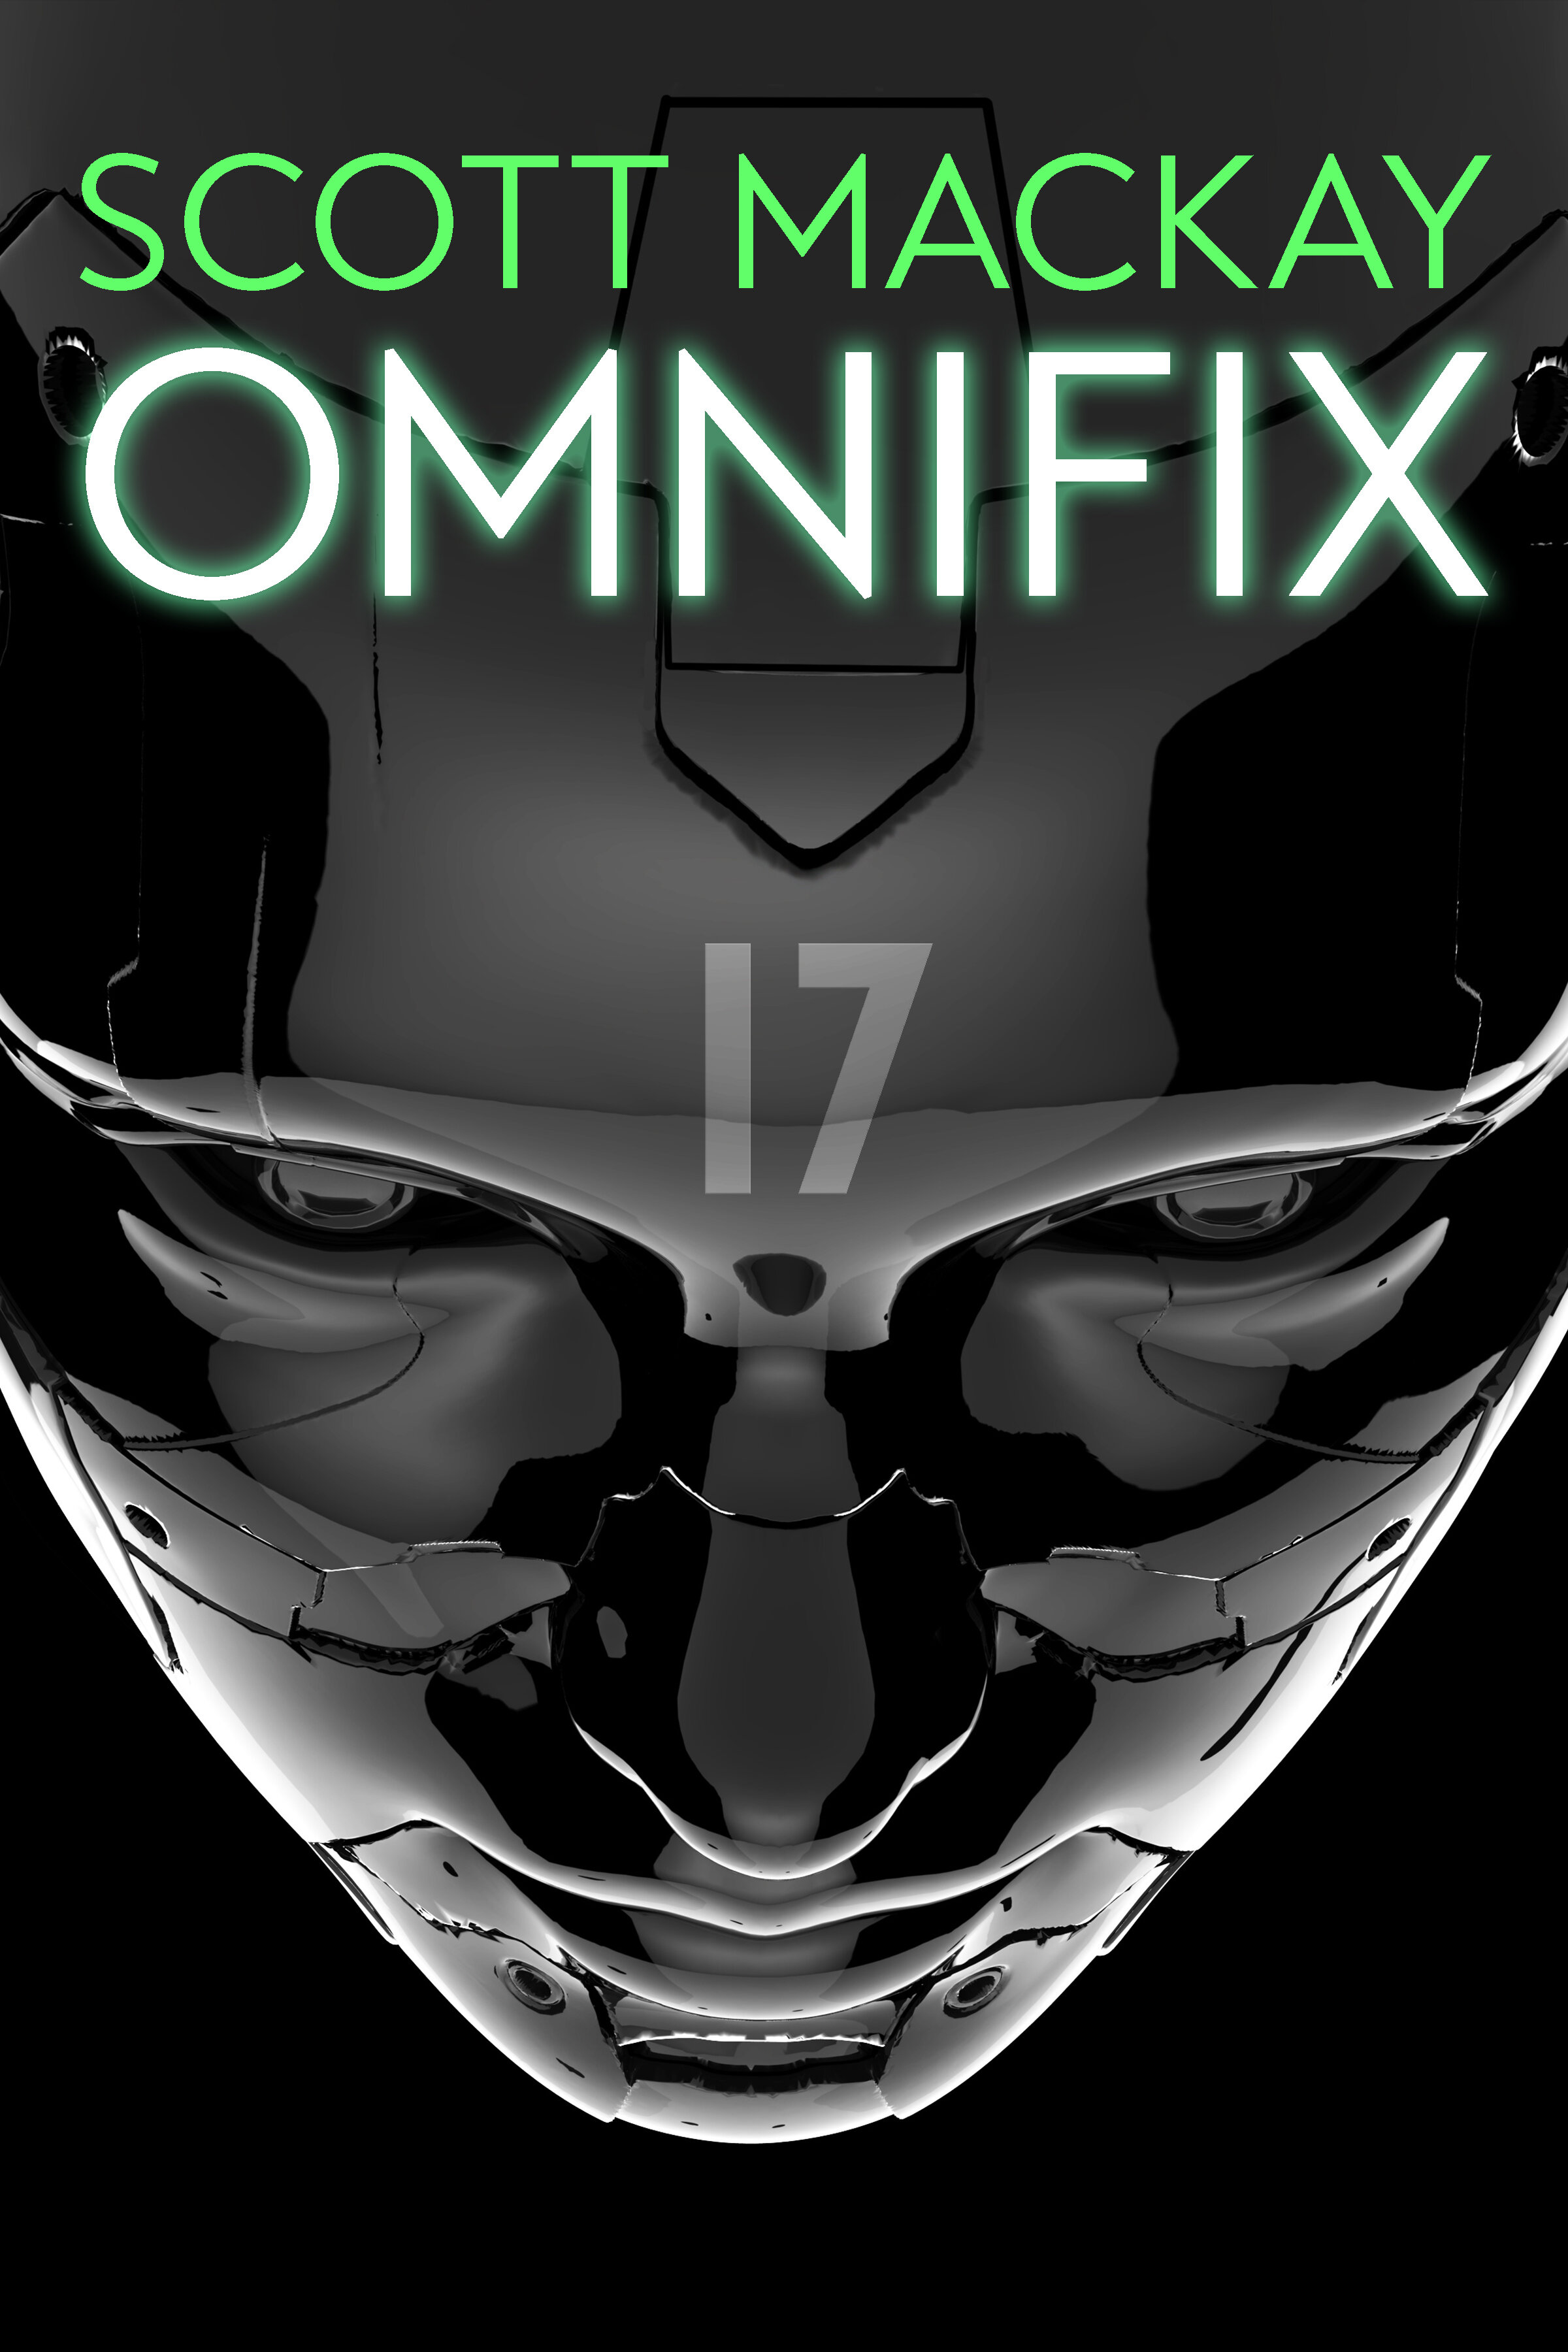 omnifix.jpg